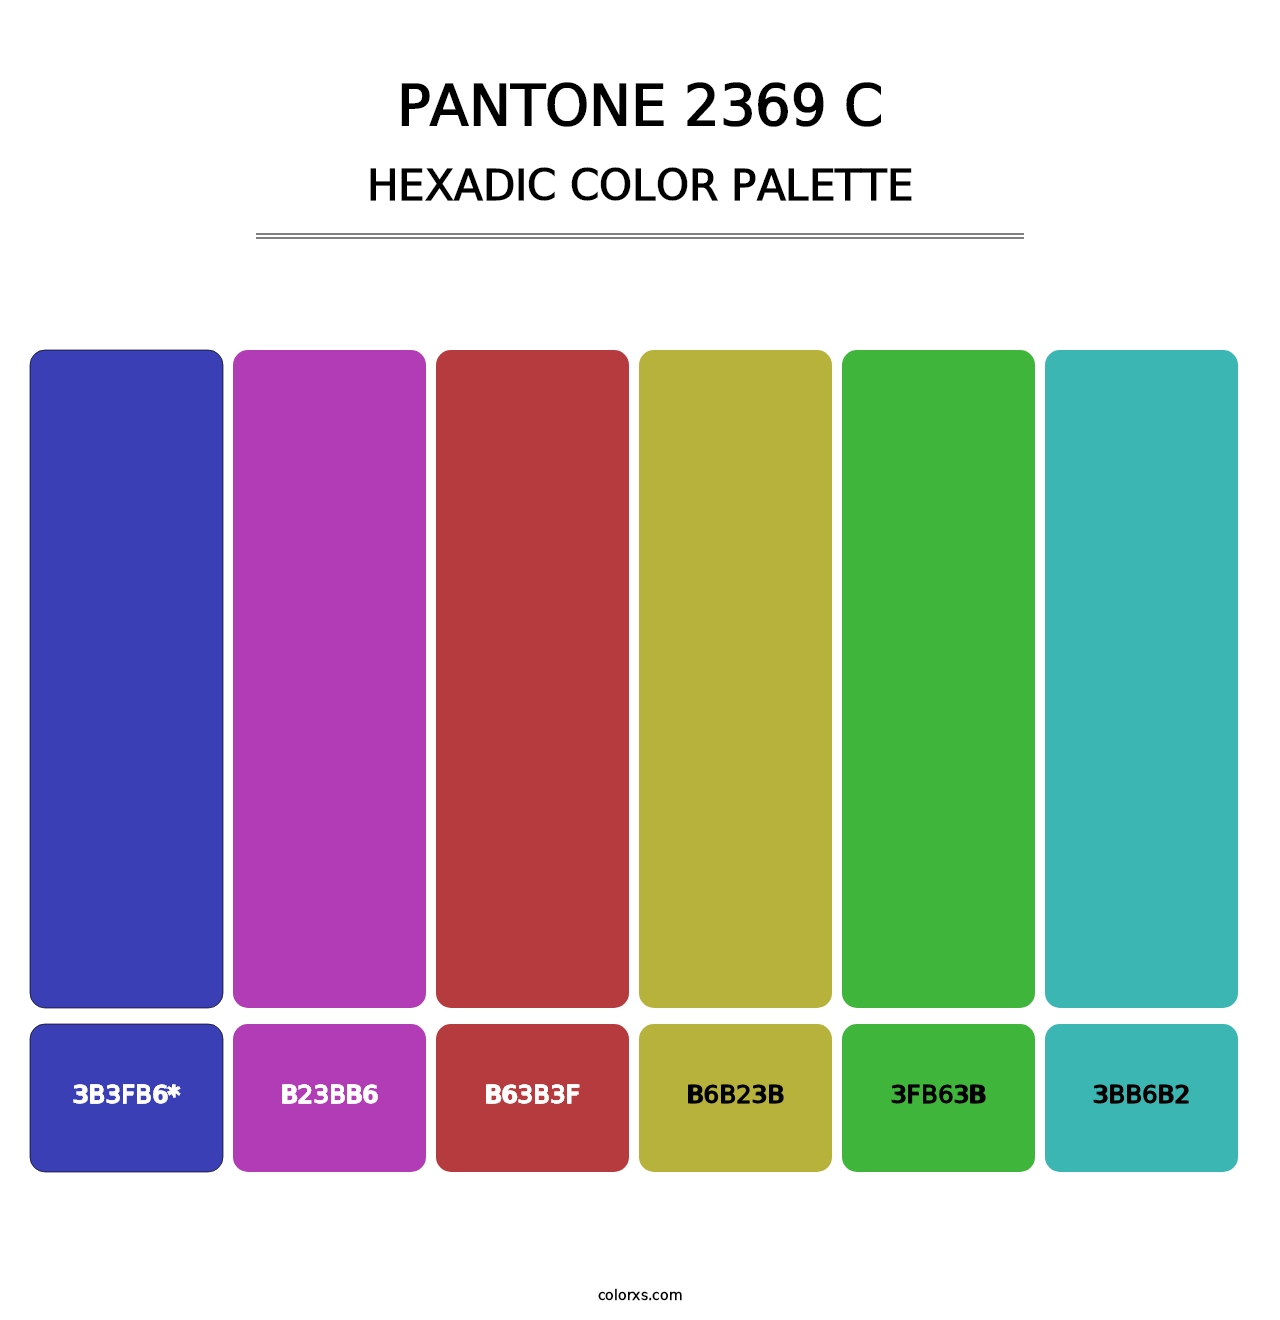 PANTONE 2369 C - Hexadic Color Palette